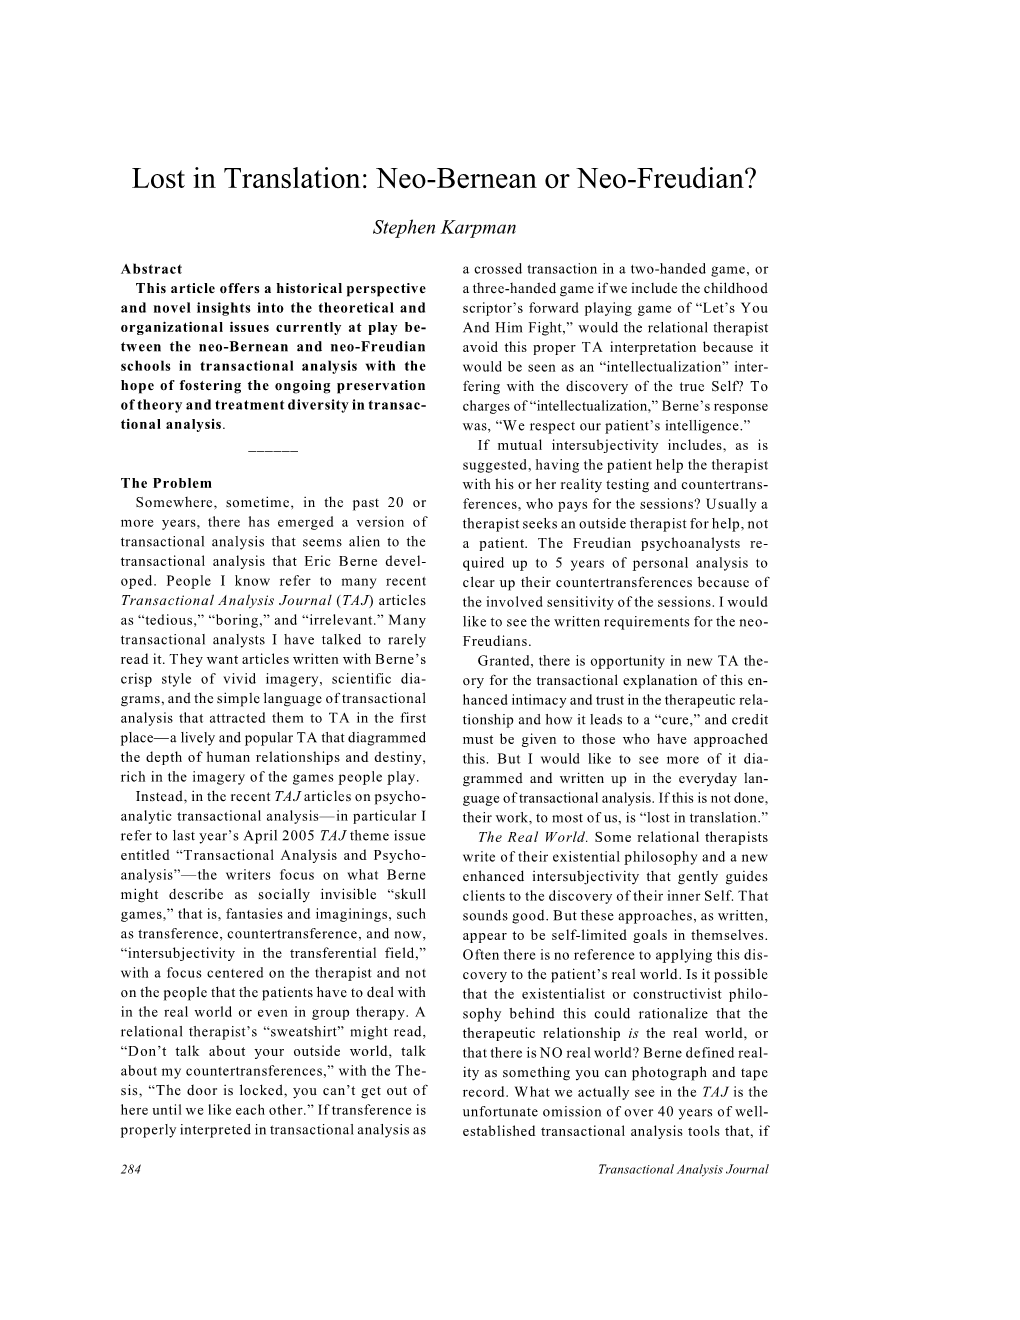 Lost in Translation: Neo-Bernean Or Neo-Freudian?